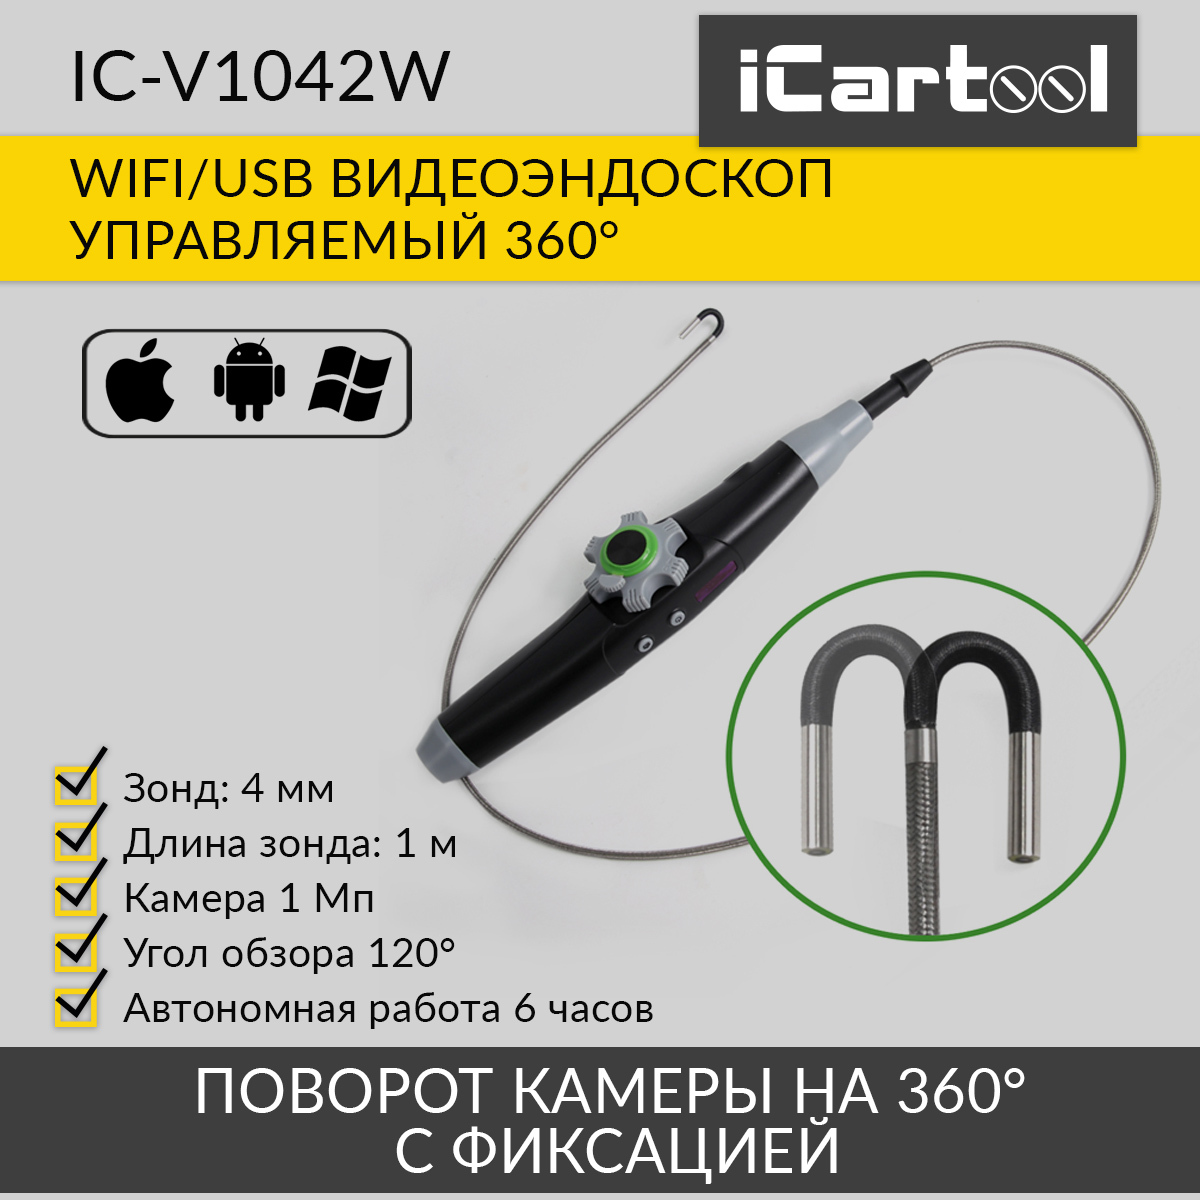 Видеоэндоскоп управляемый iCartool IC-V1042W WIFI/USB, 1Мп, 1168х720, 1м, 4мм зонд, 360° видеоэндоскоп launch